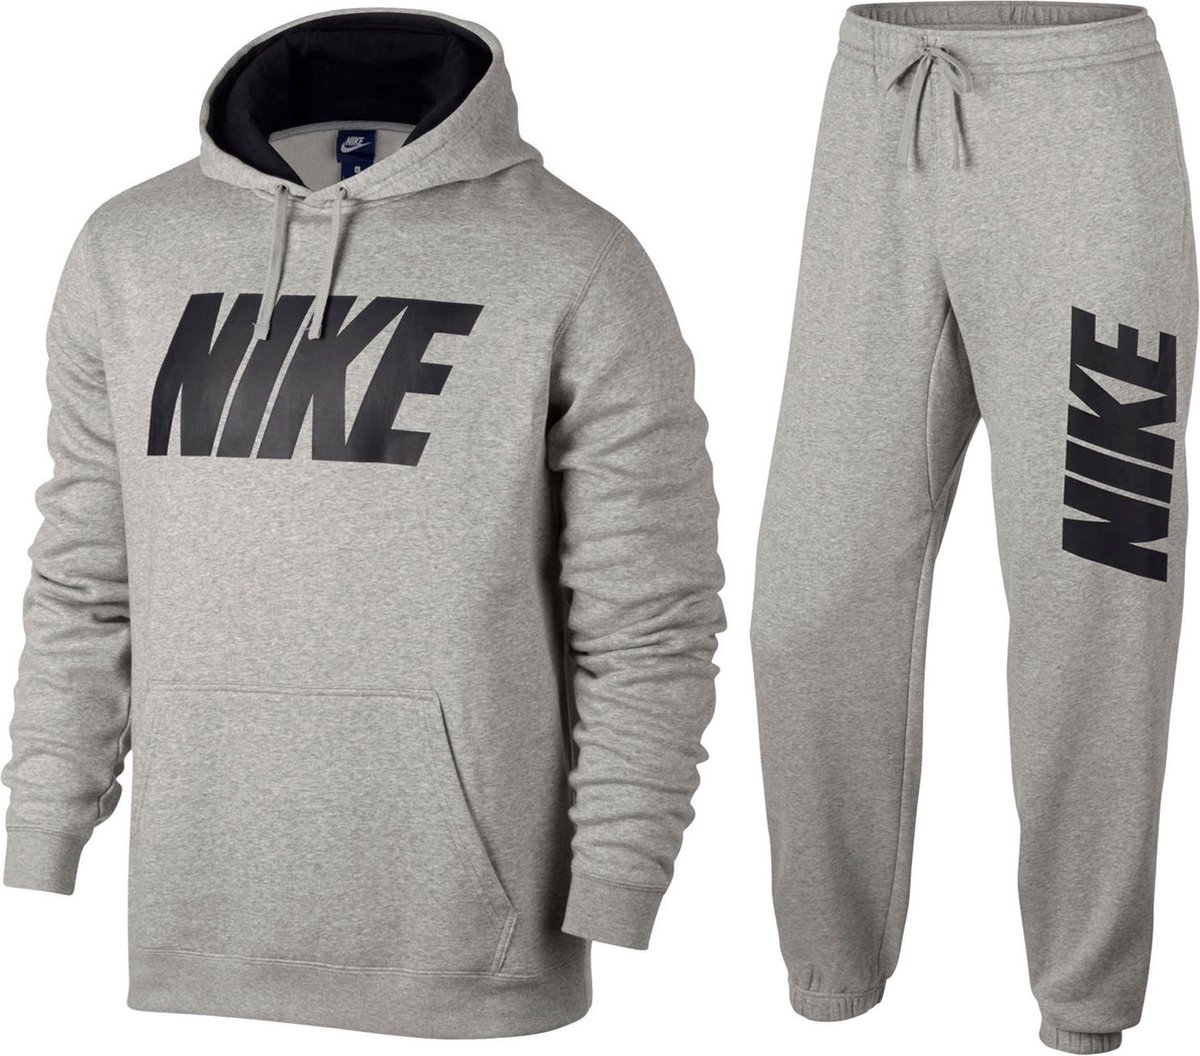 Nike Sportswear Trainingspak - Maat M - Mannen - grijs/zwart | bol.com